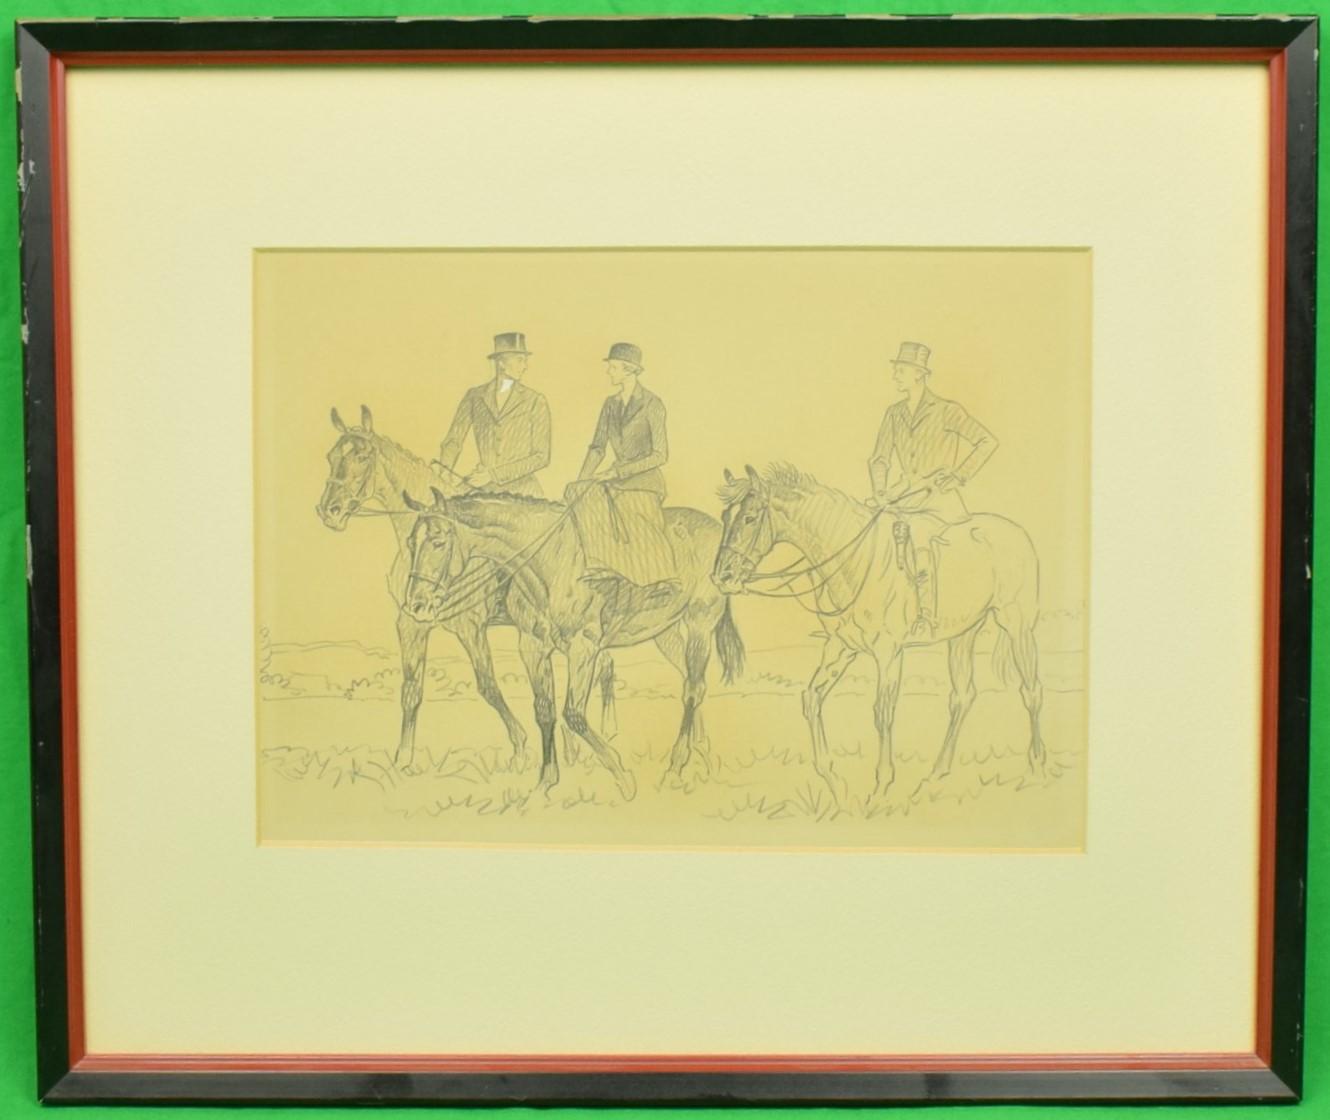 Paul Brown Original c1937 Pencil Drawing w/ 3 Equestrian Riders - Art by Paul Desmond Brown